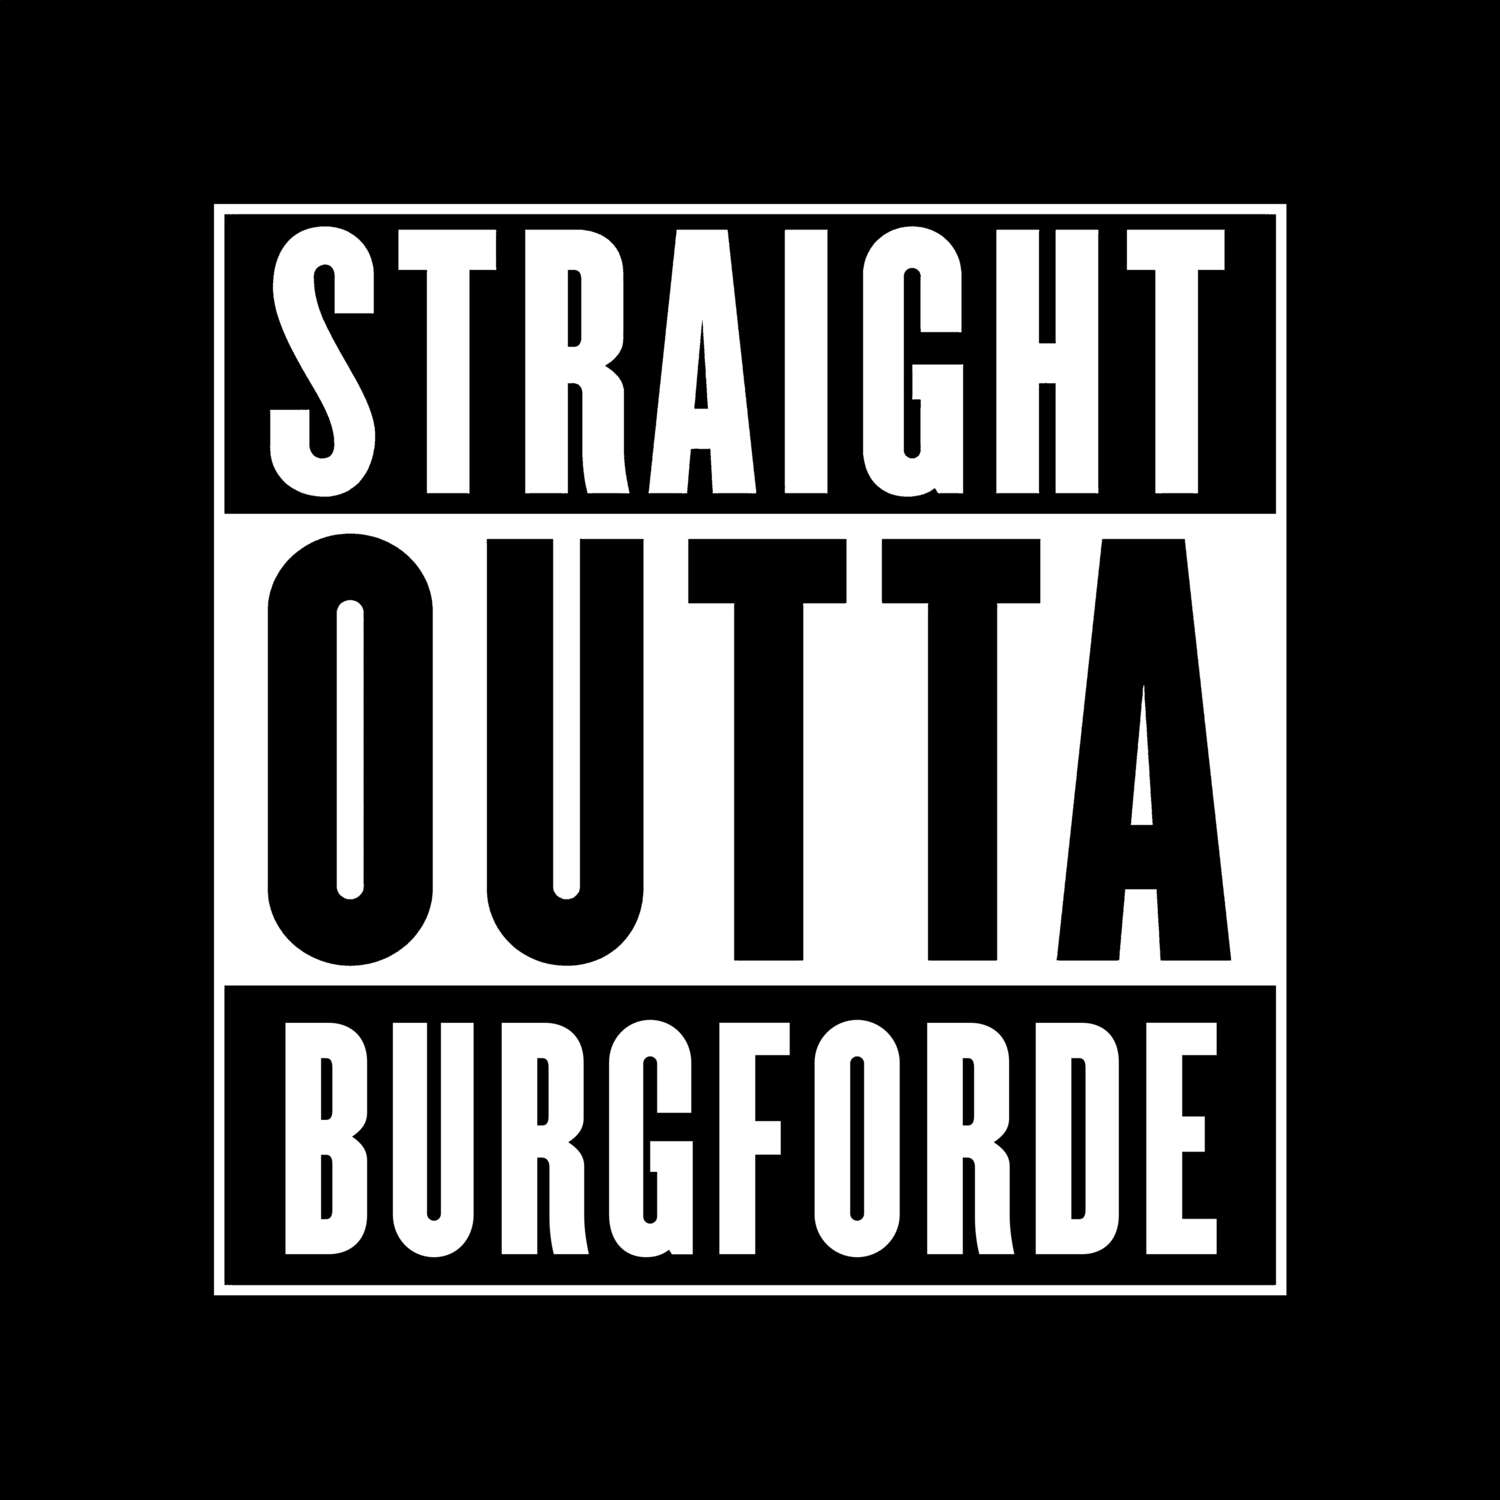 Burgforde T-Shirt »Straight Outta«